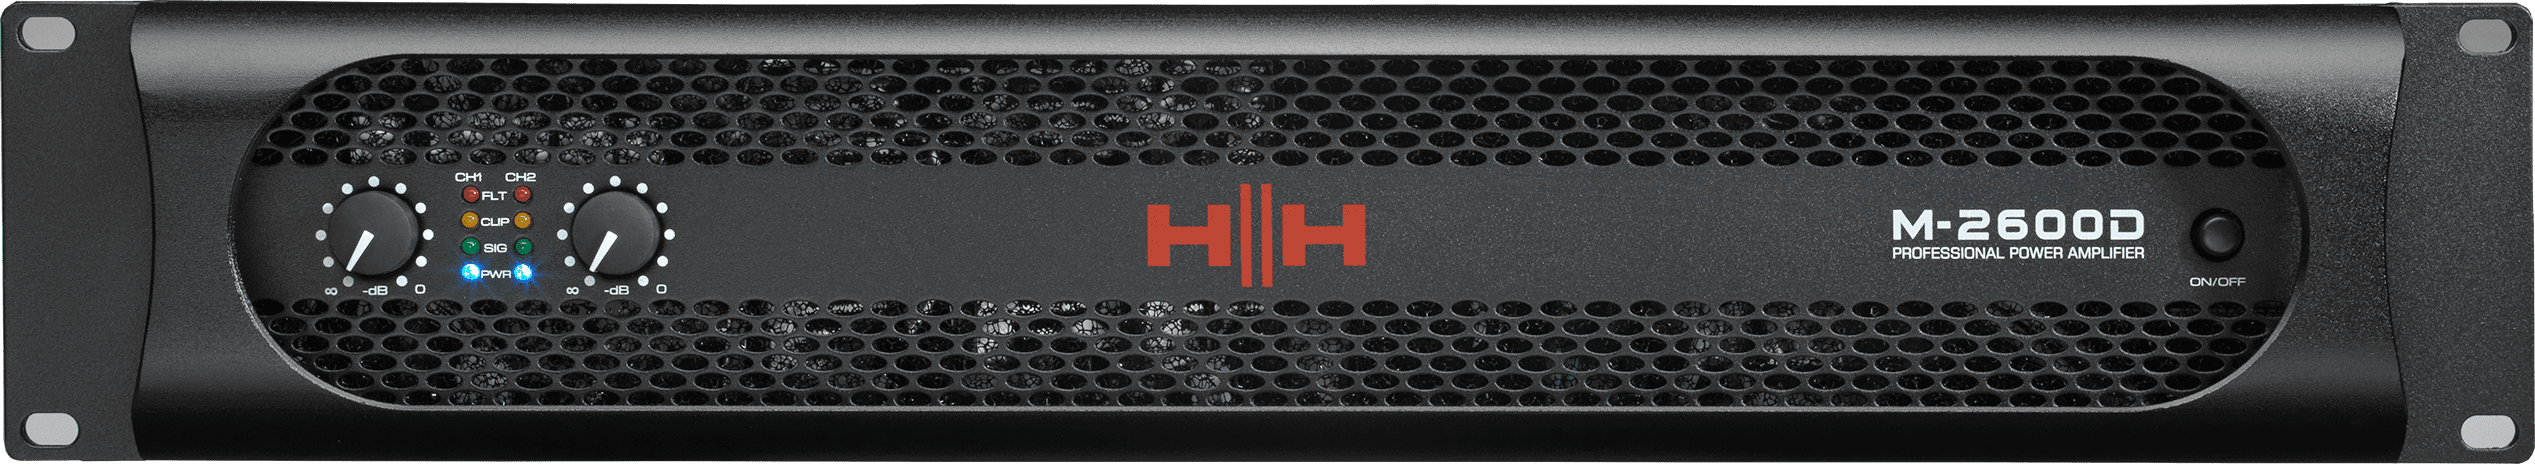 HH M-2600D - Panel view